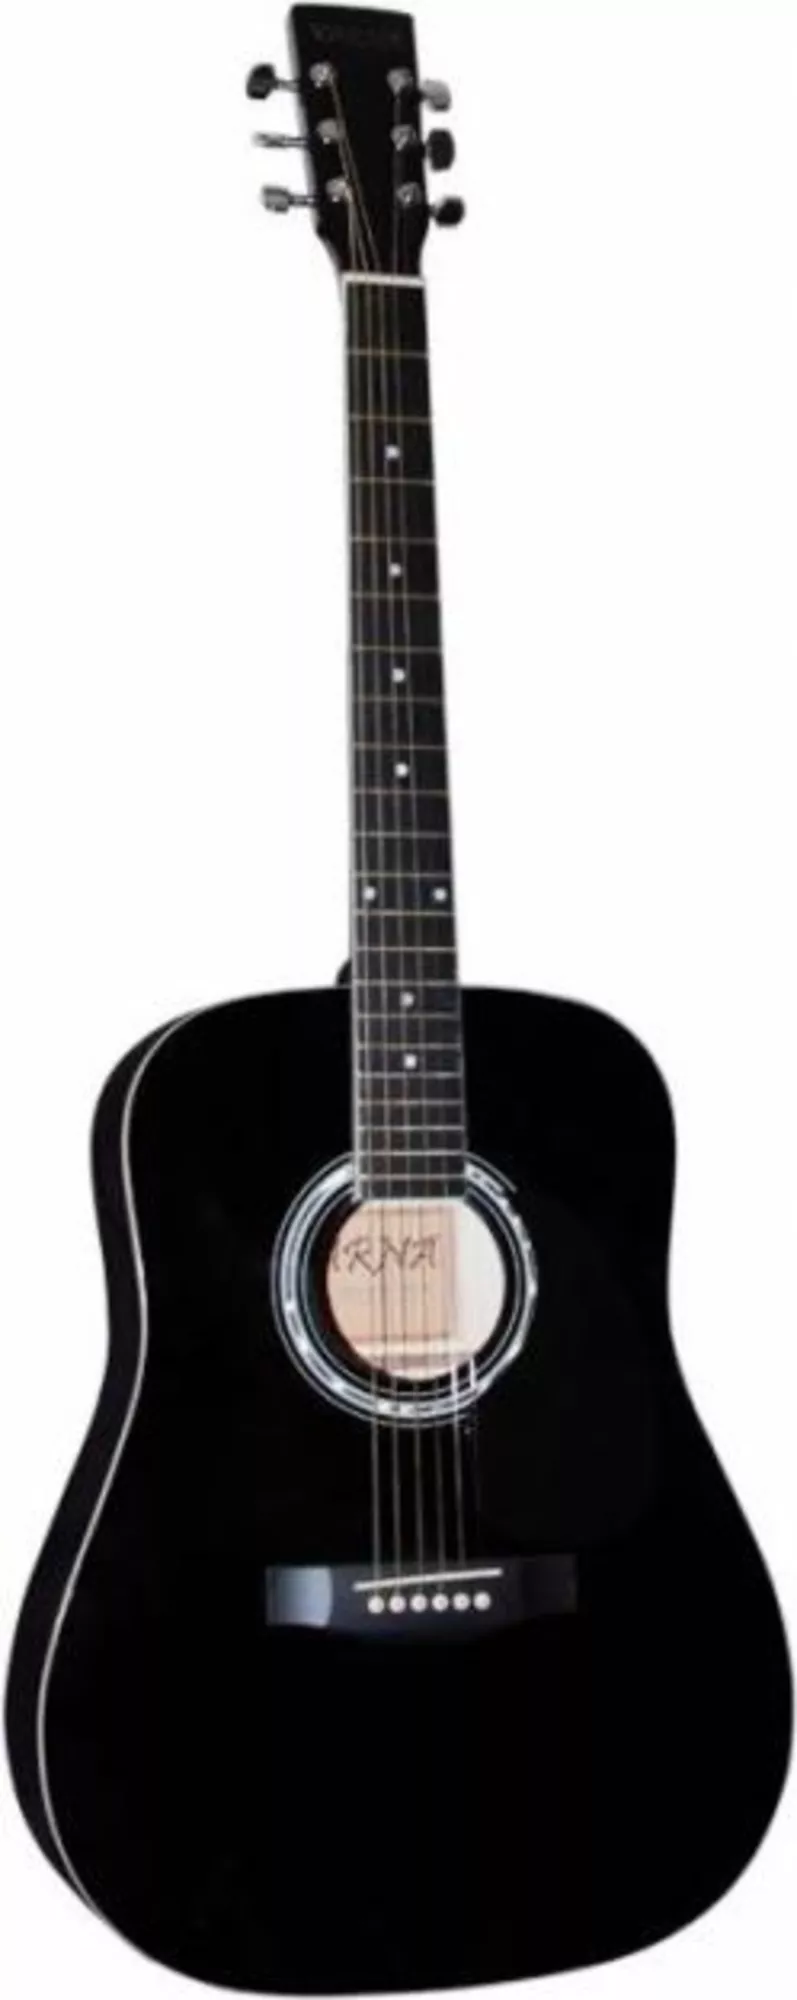 Western гитара VARNA MD-039 продажа/обмен